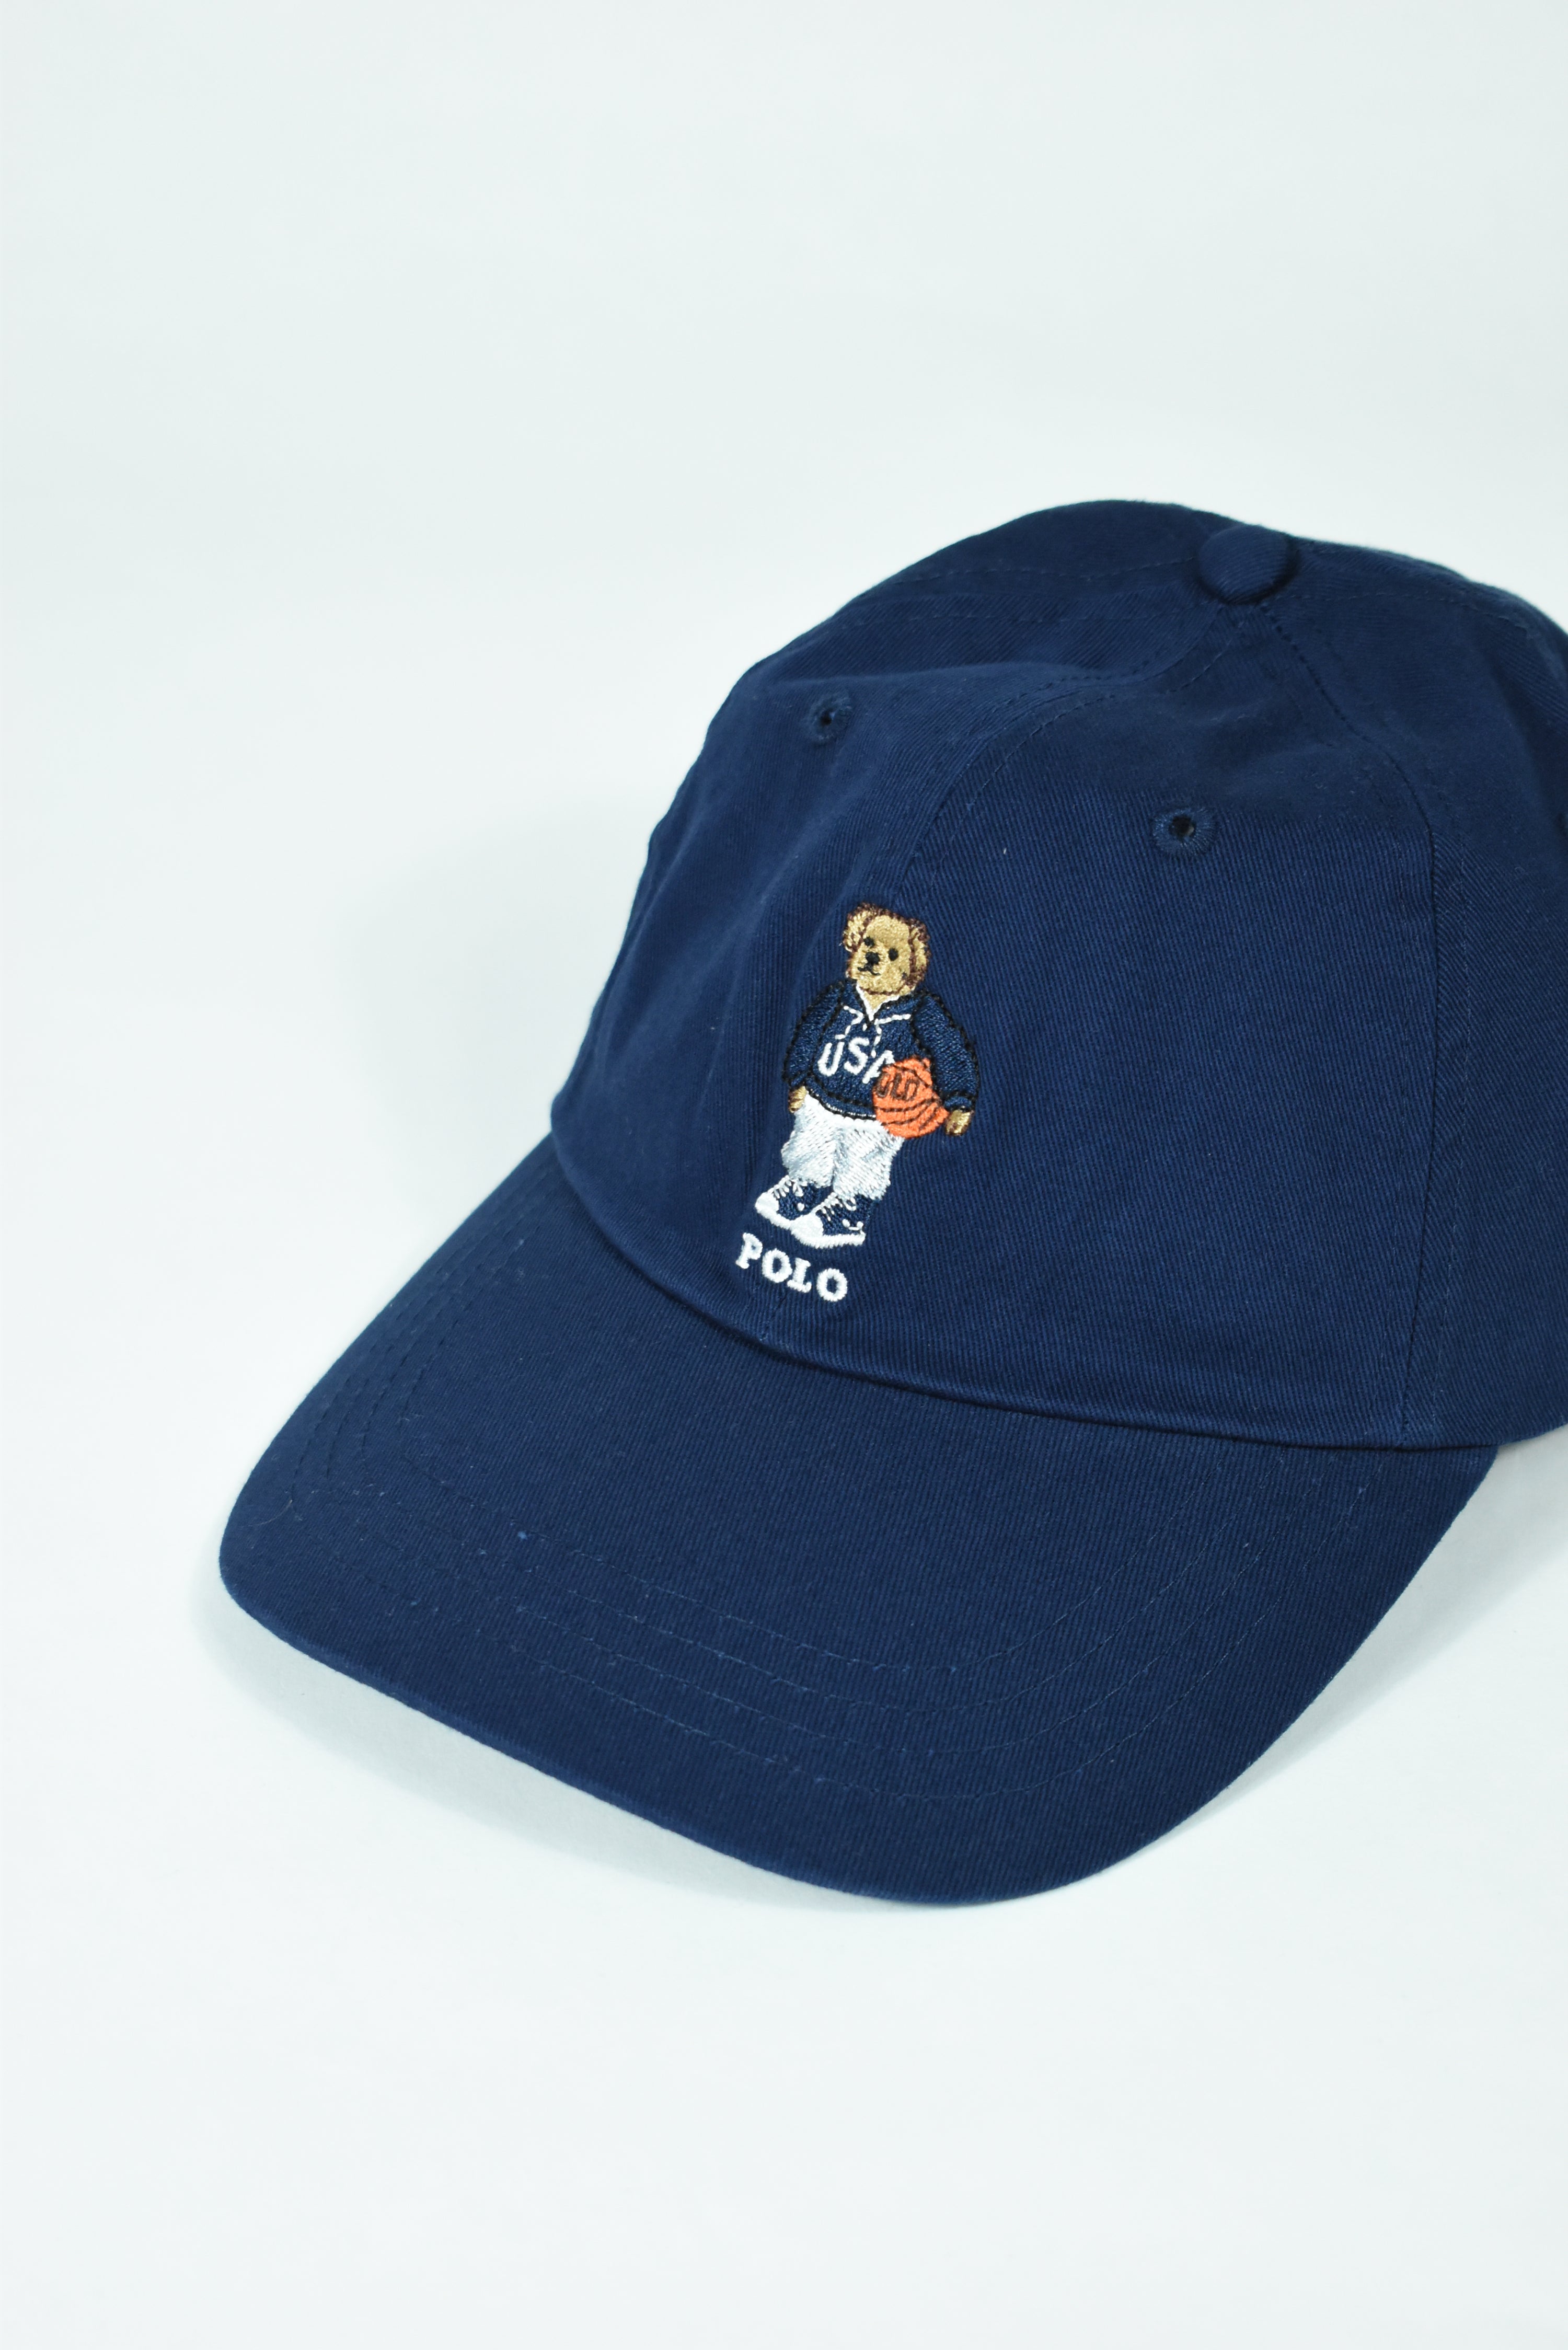 New Navy RL Polo Bear Basketball Embroidery Cap